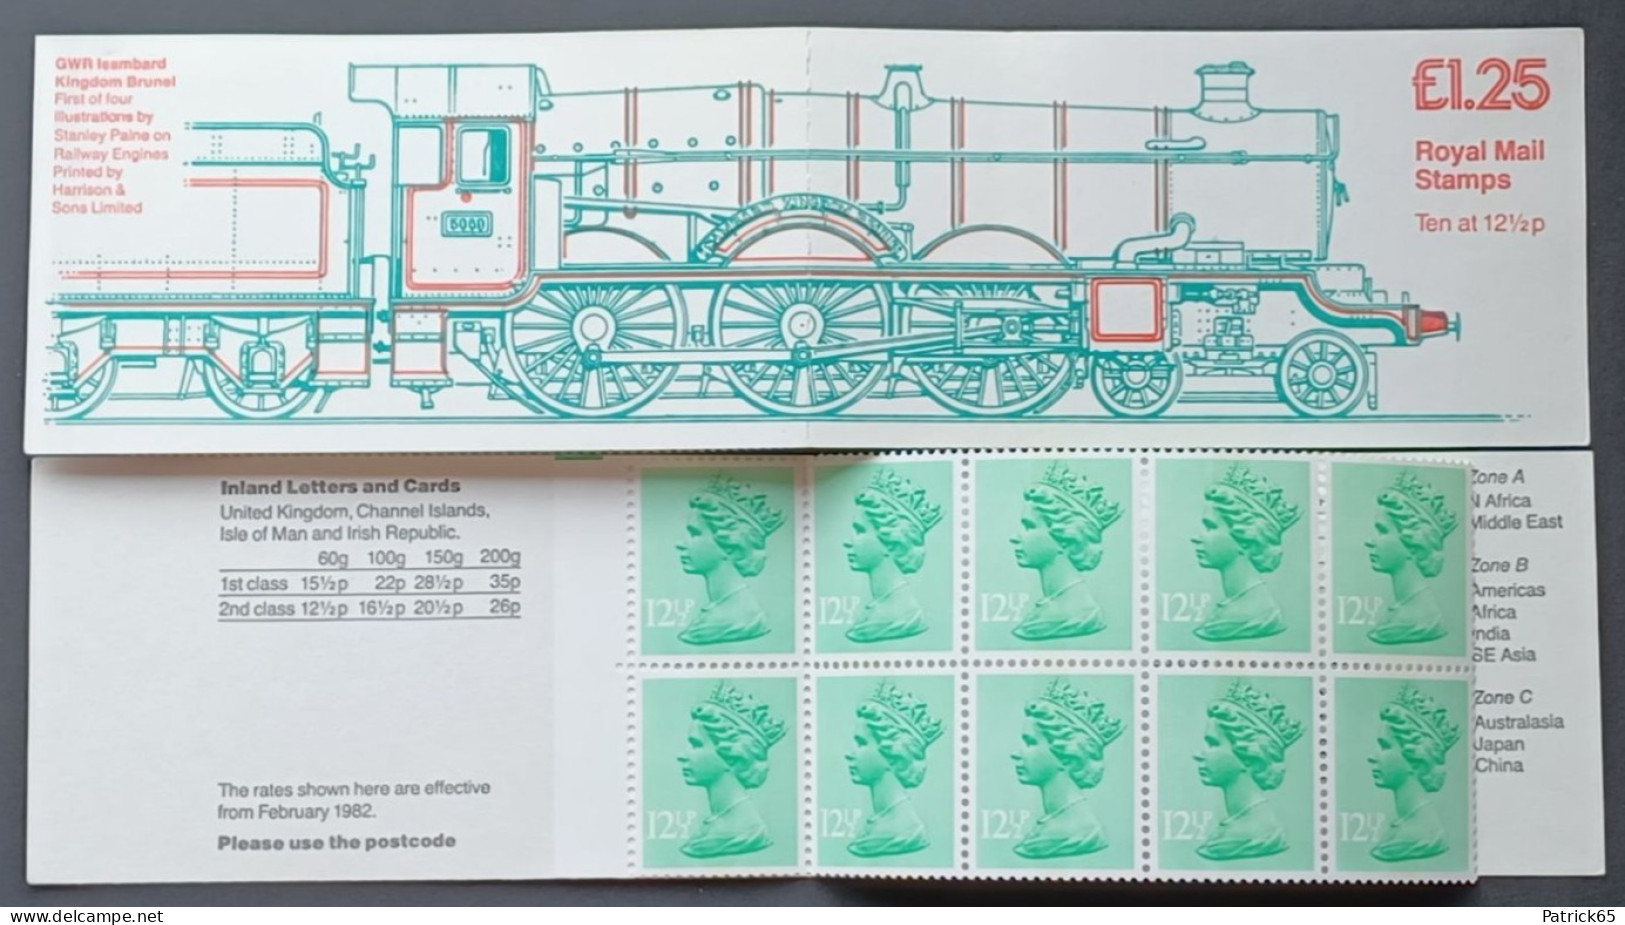 Groot Brittannie 1983 Sg.FK5B - MNH Compleet Boekje GWR Isambard Kingdom Brunei 1/4 - Carnets